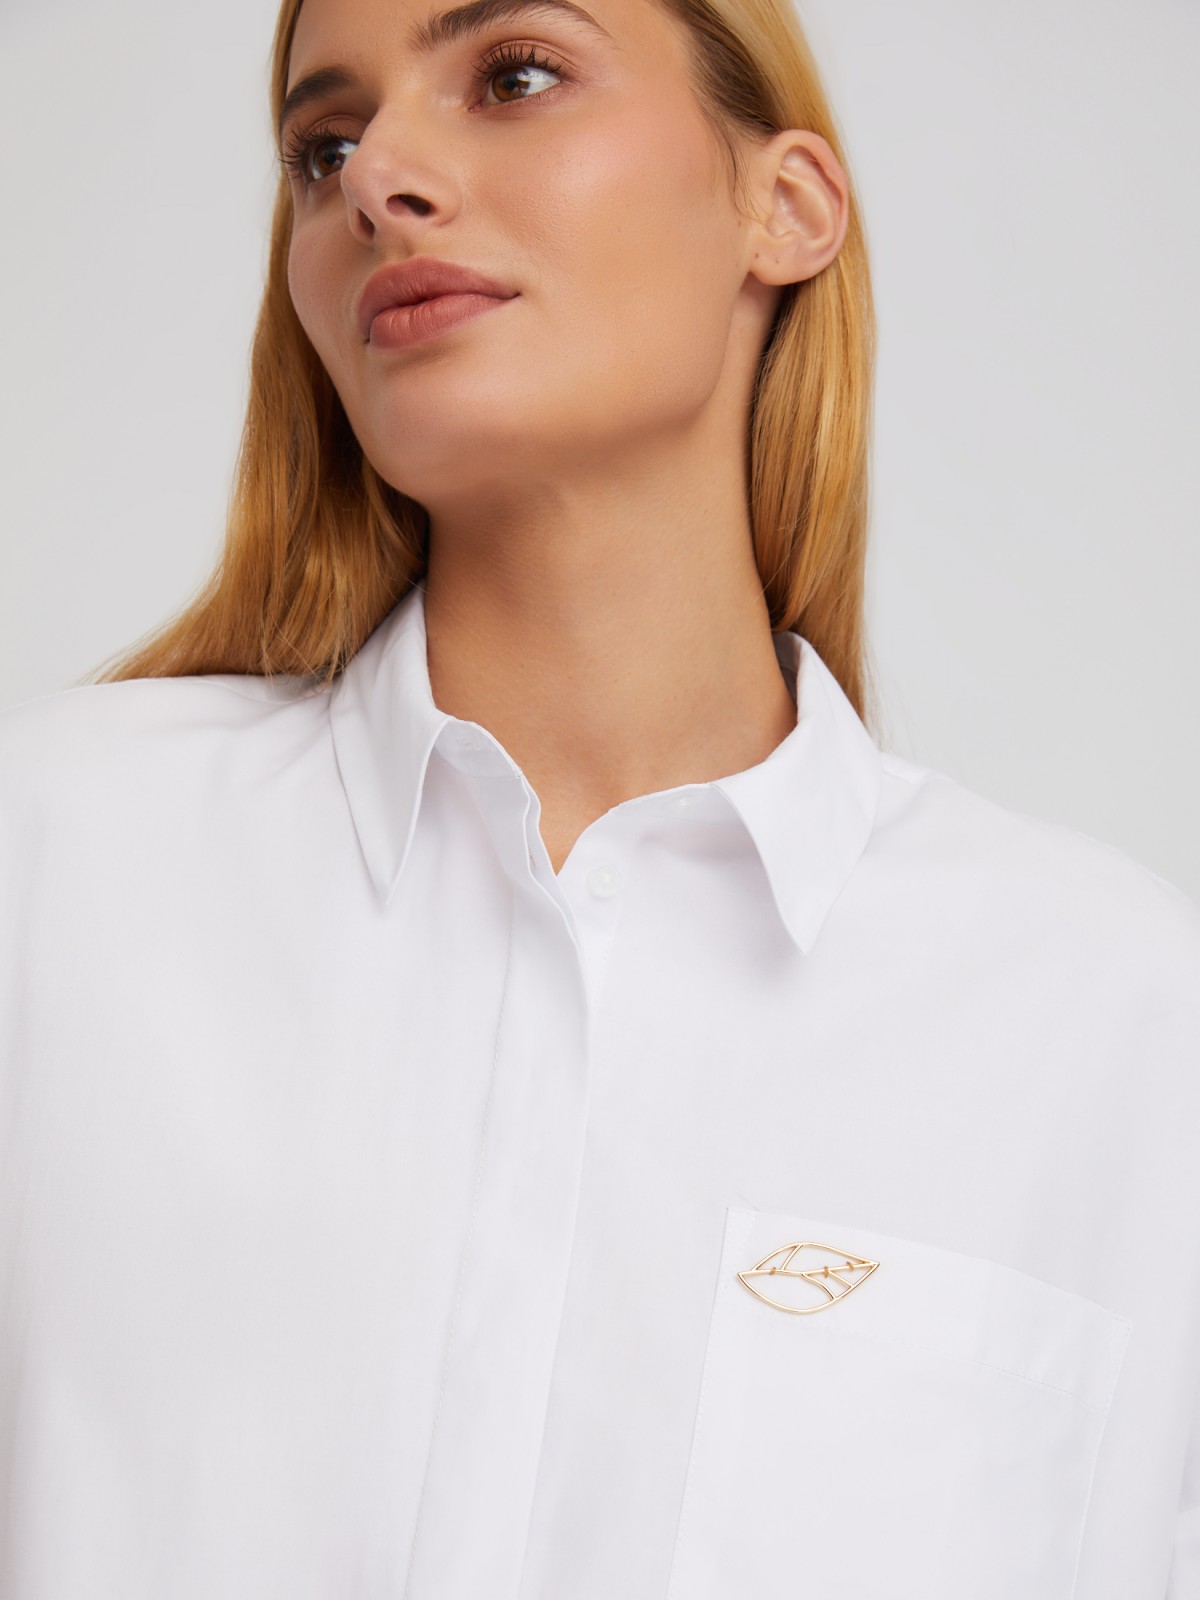 Рубашка оверсайз силуэта с металлическим значком-нашивкой zolla 02411117Y052, цвет белый, размер XXS - фото 5